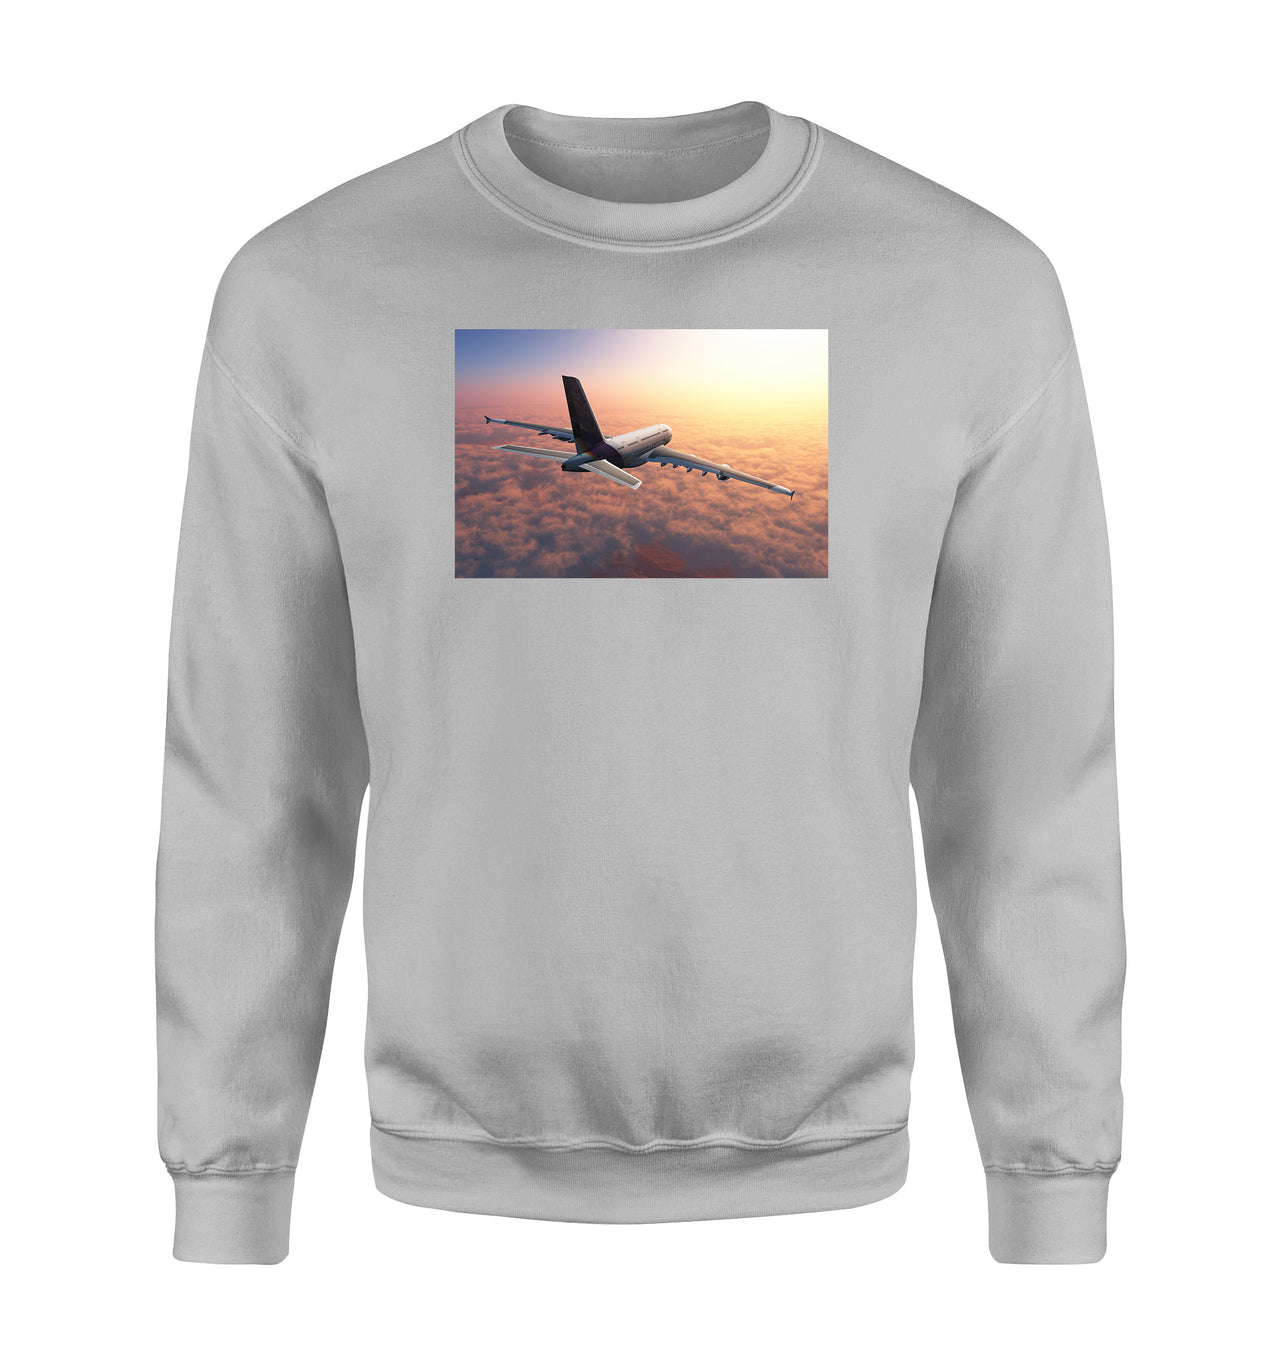 Super Cruising Airbus A380 over Clouds Designed Sweatshirts